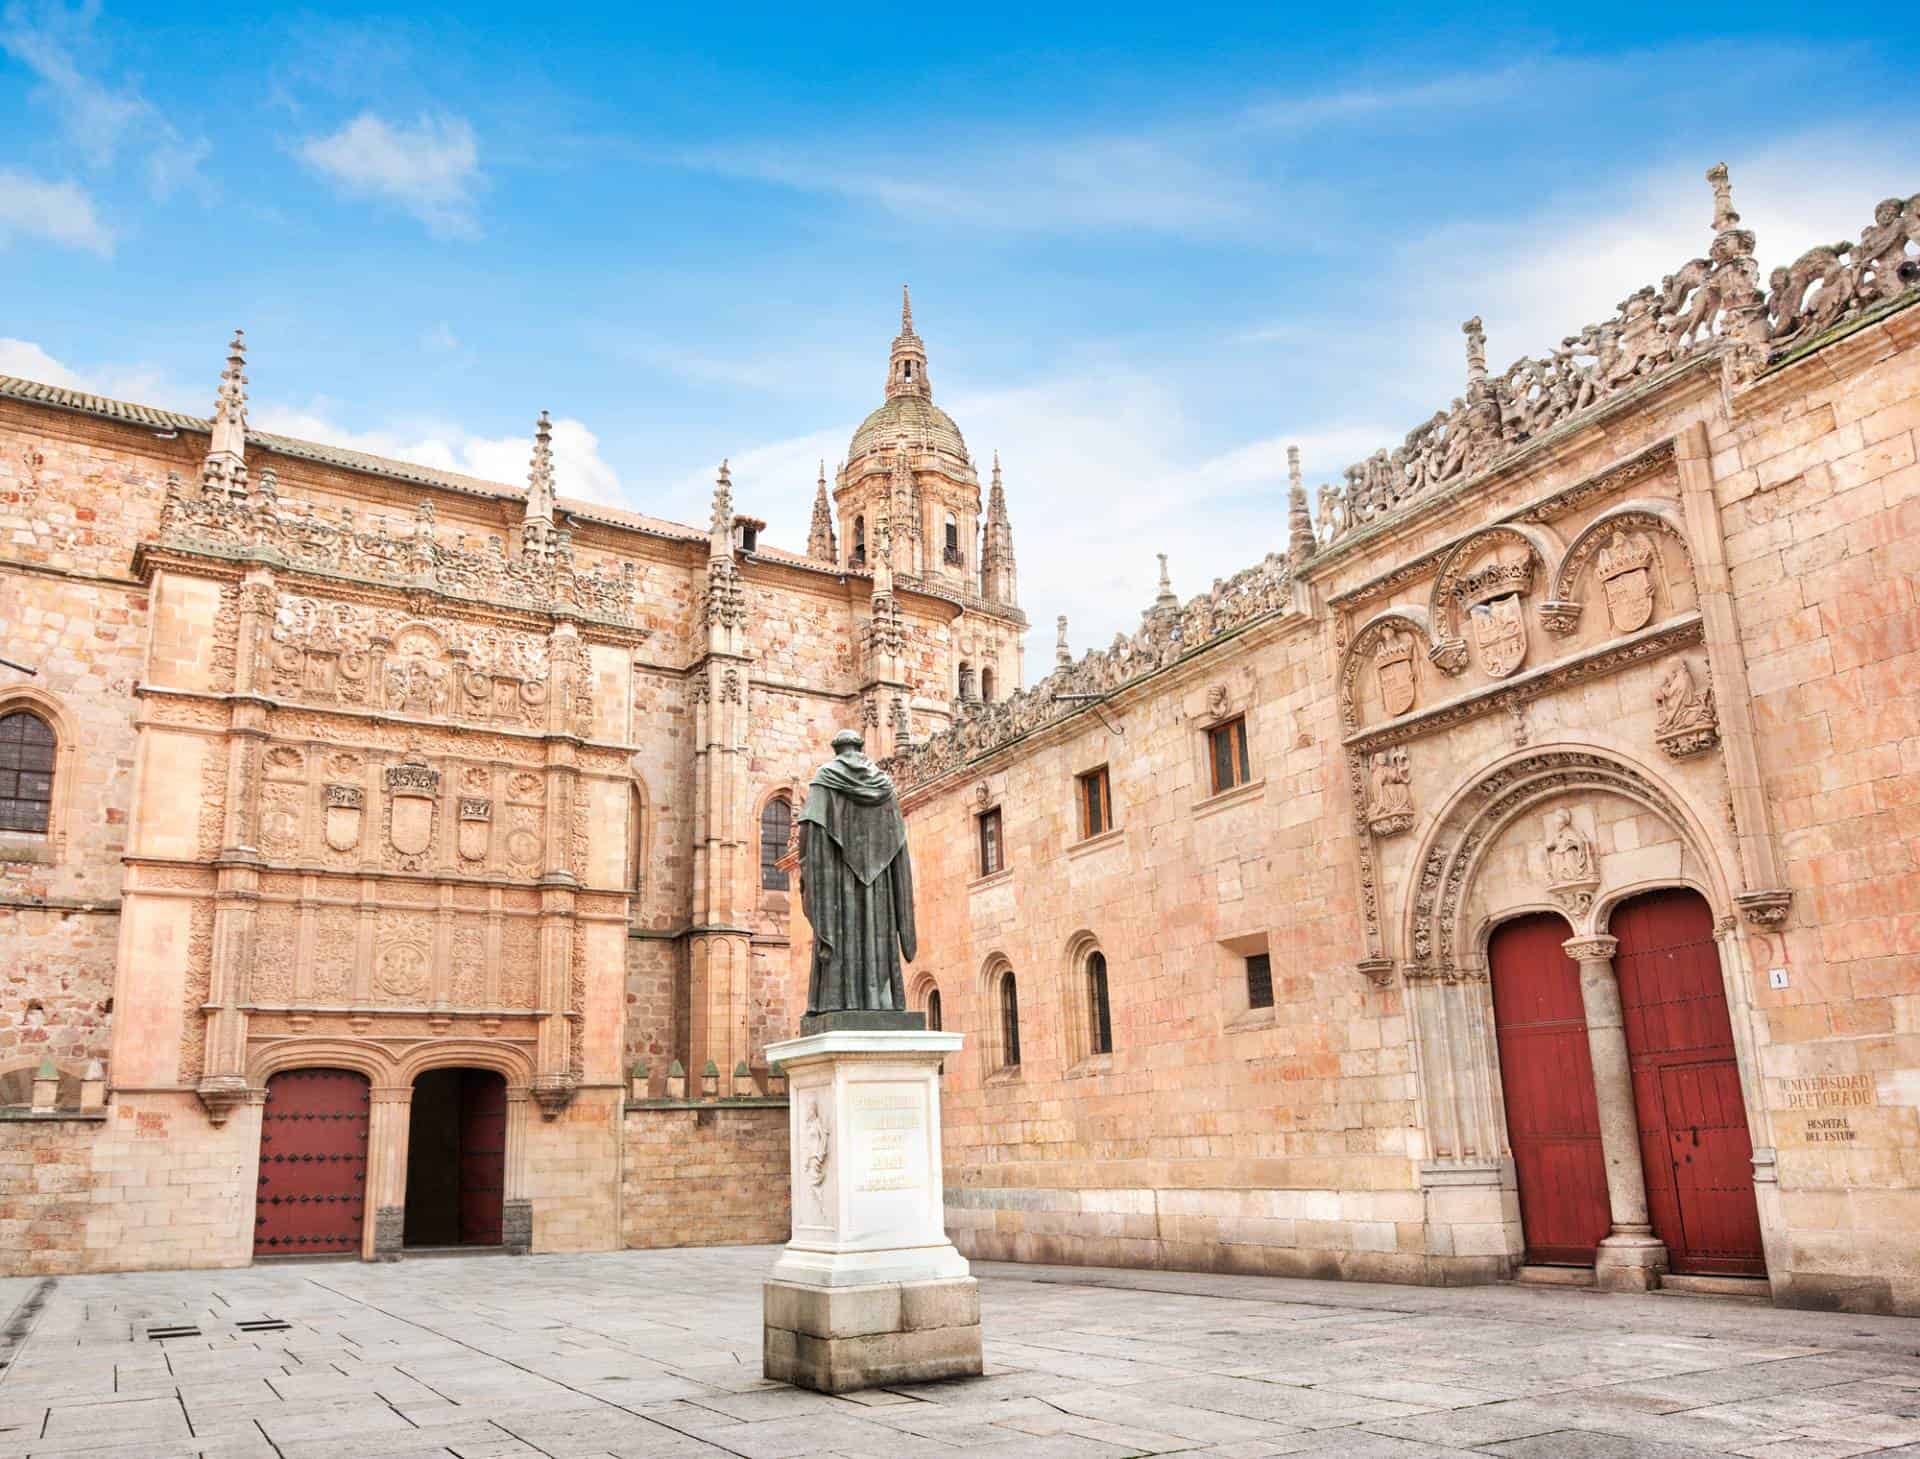 Famous University of Salamanca, in the Castile and Leon region, Spain.